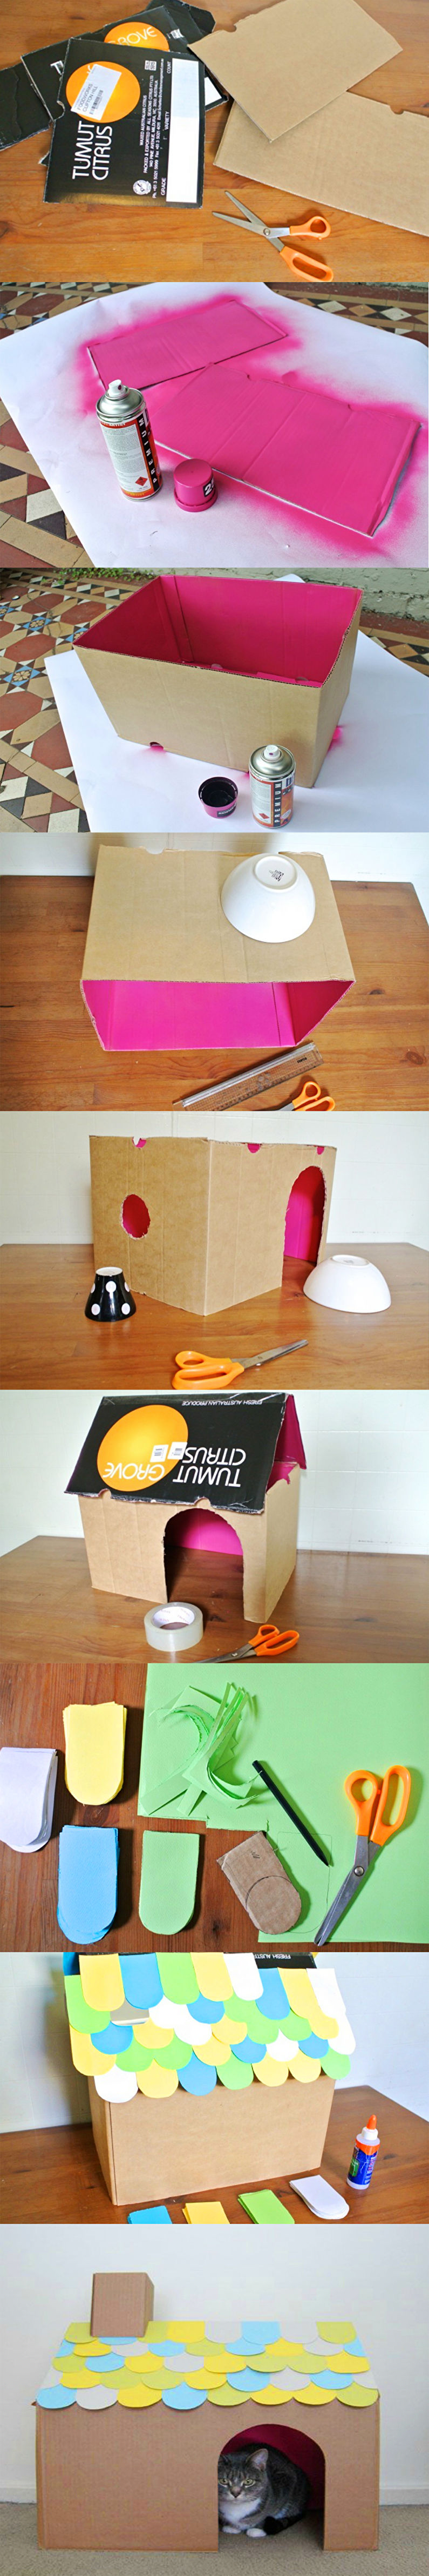 DIY Cat House - Simpleng Cardboard House